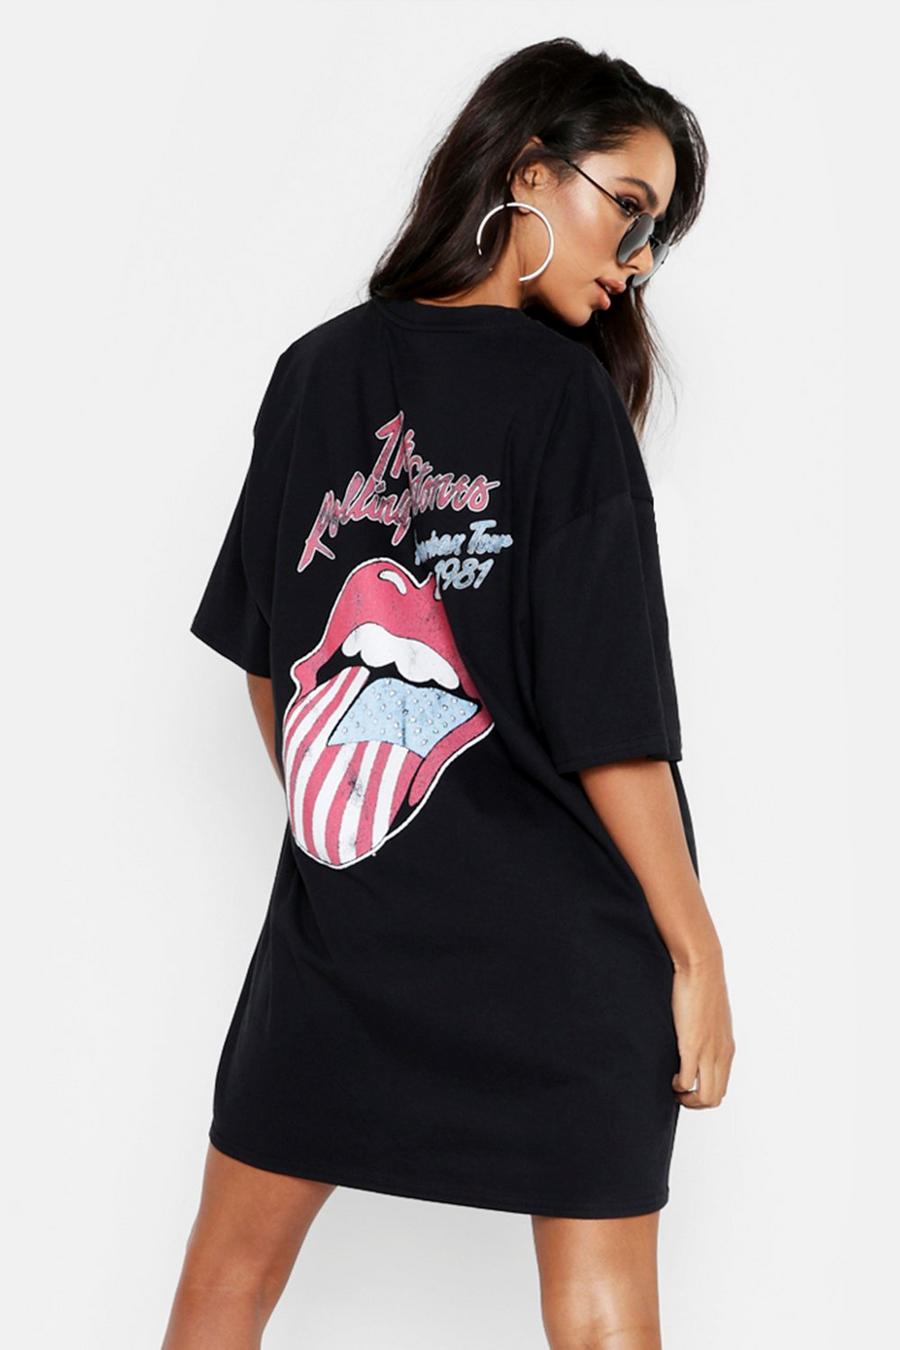 Black Rolling Stones License T-Shirt Dress